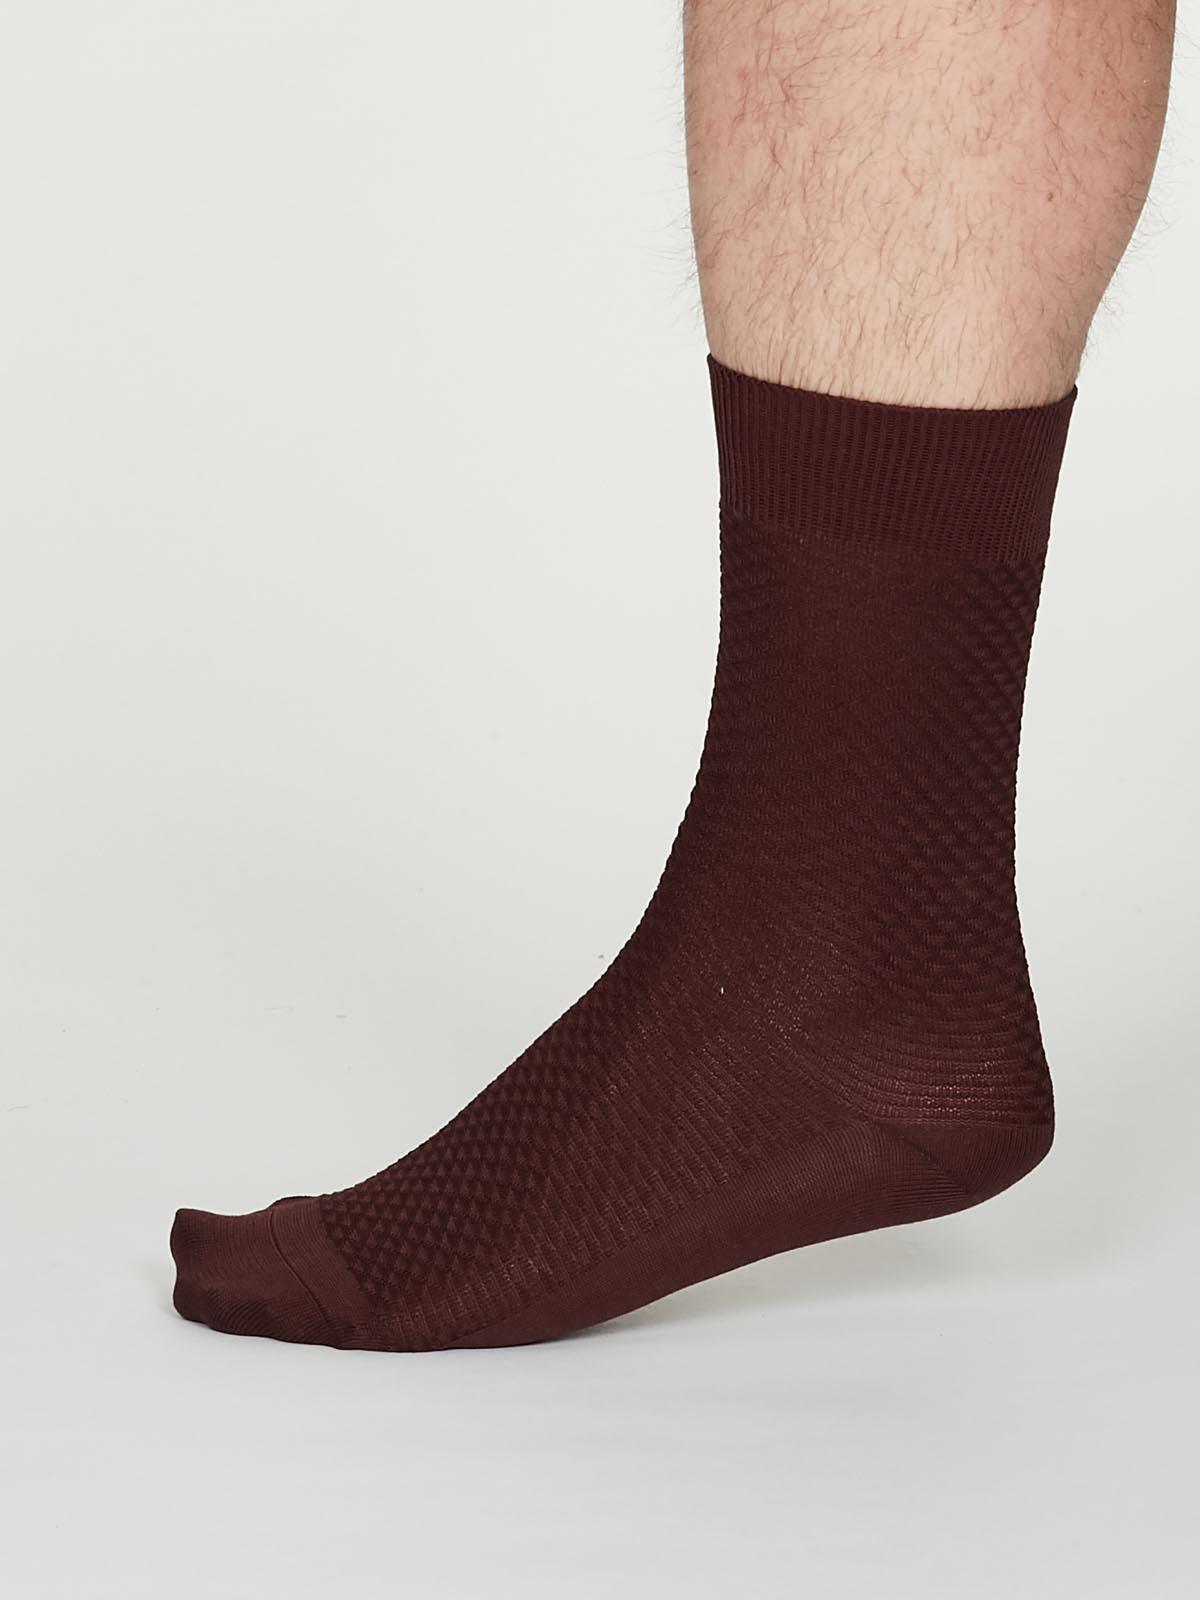 Geoffrey Organic Cotton Suit Socks - Burgundy - Thought Clothing UK